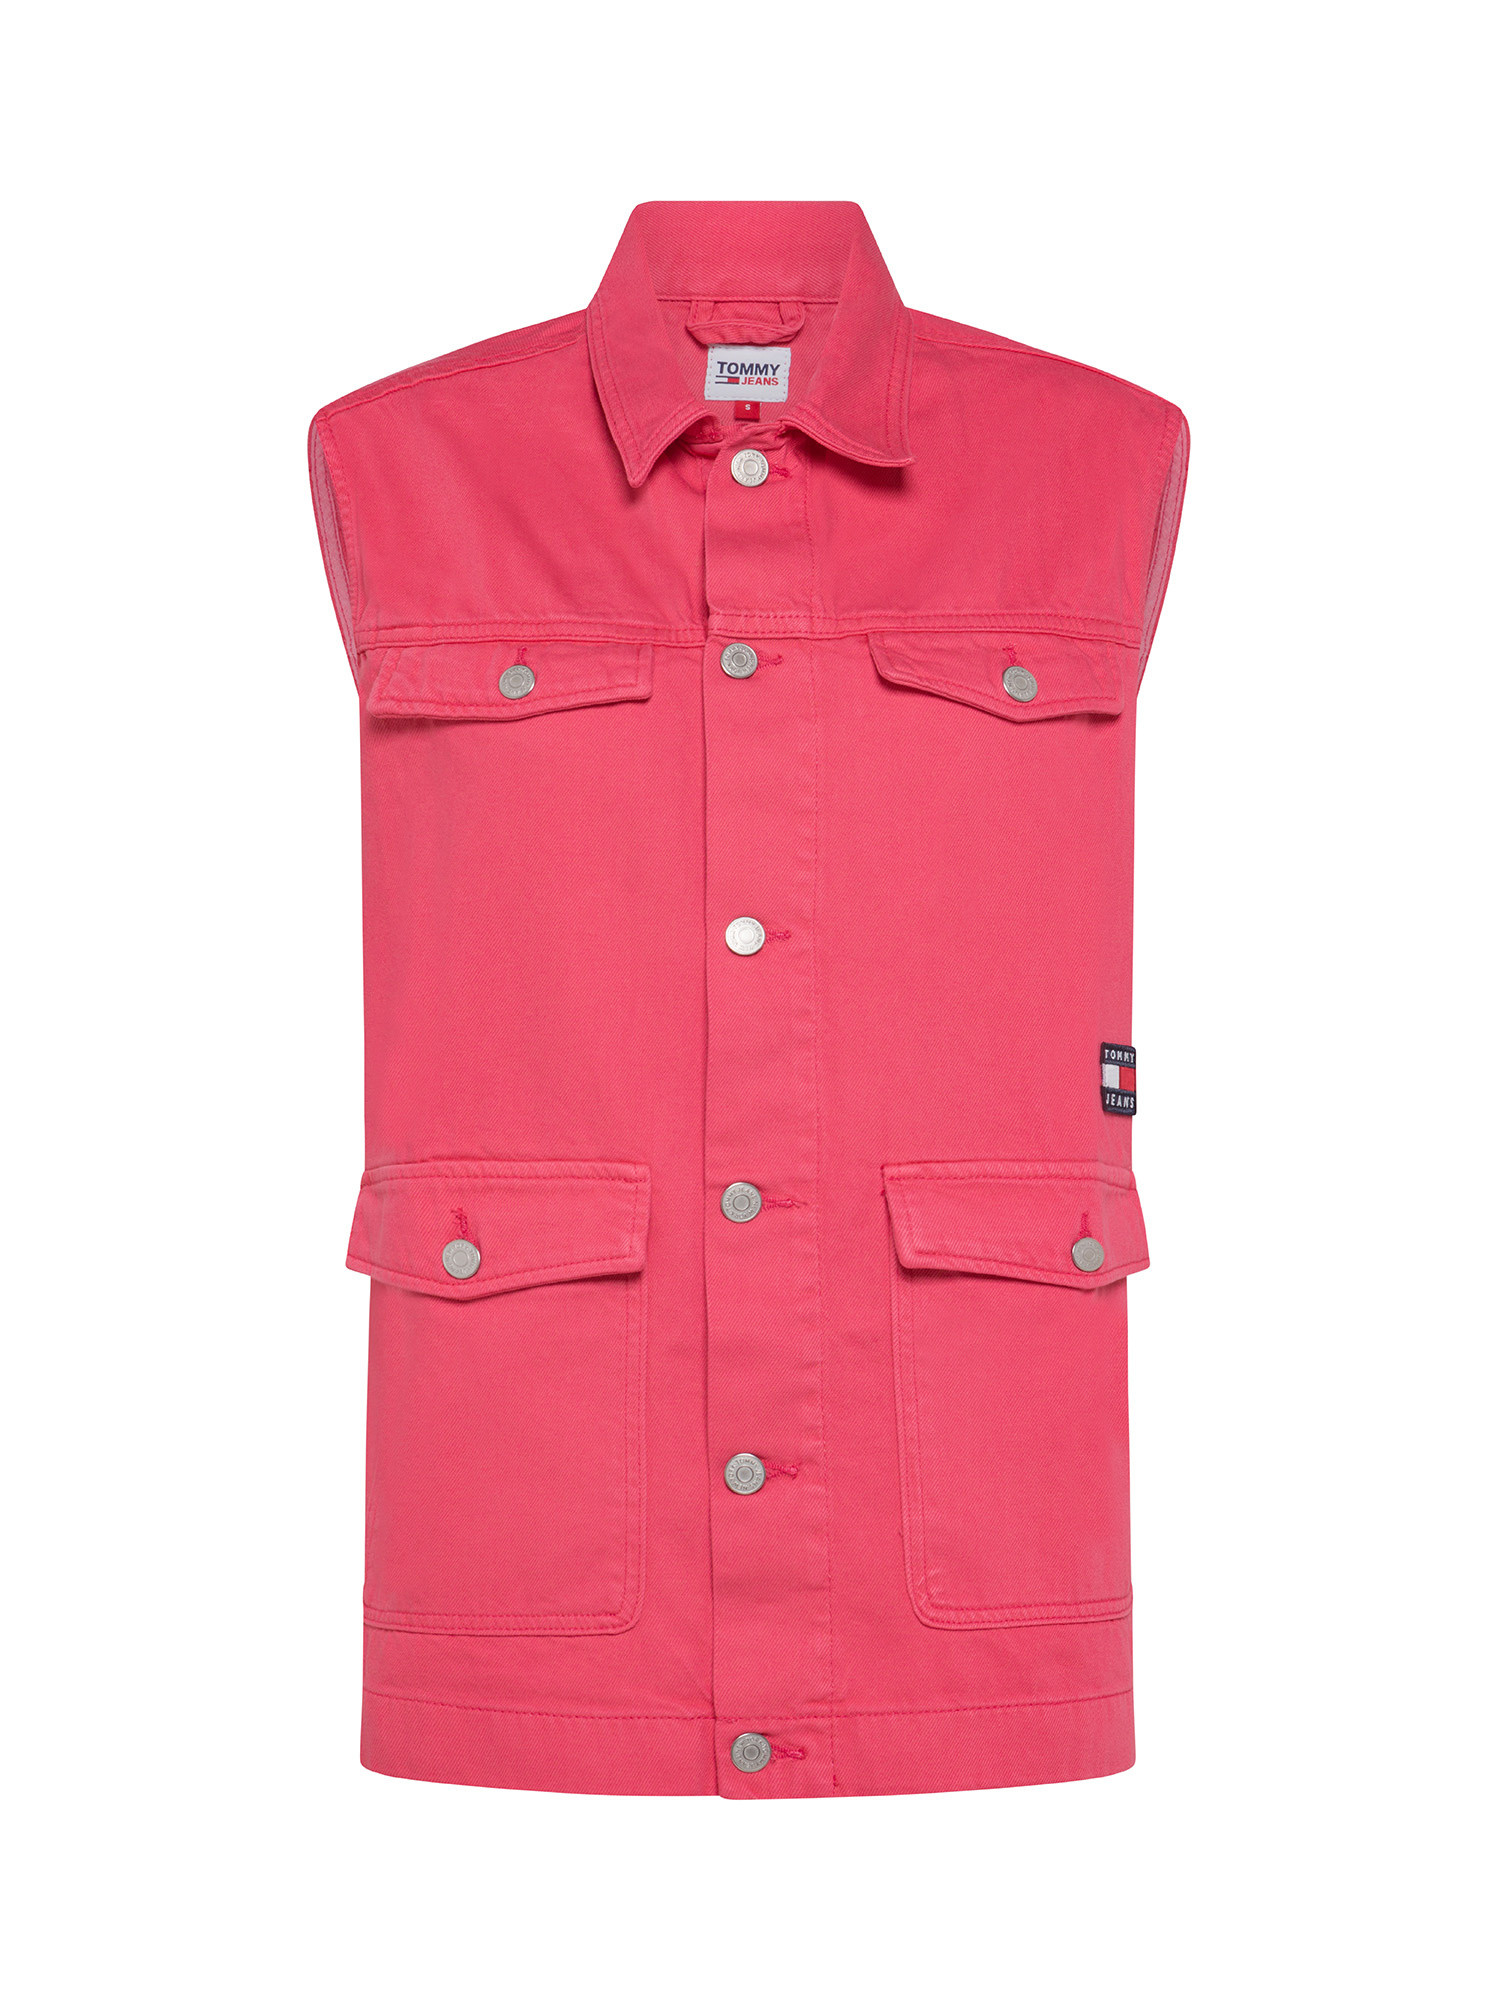 Tommy Jeans - Colored denim vest, Pink Fuchsia, large image number 0